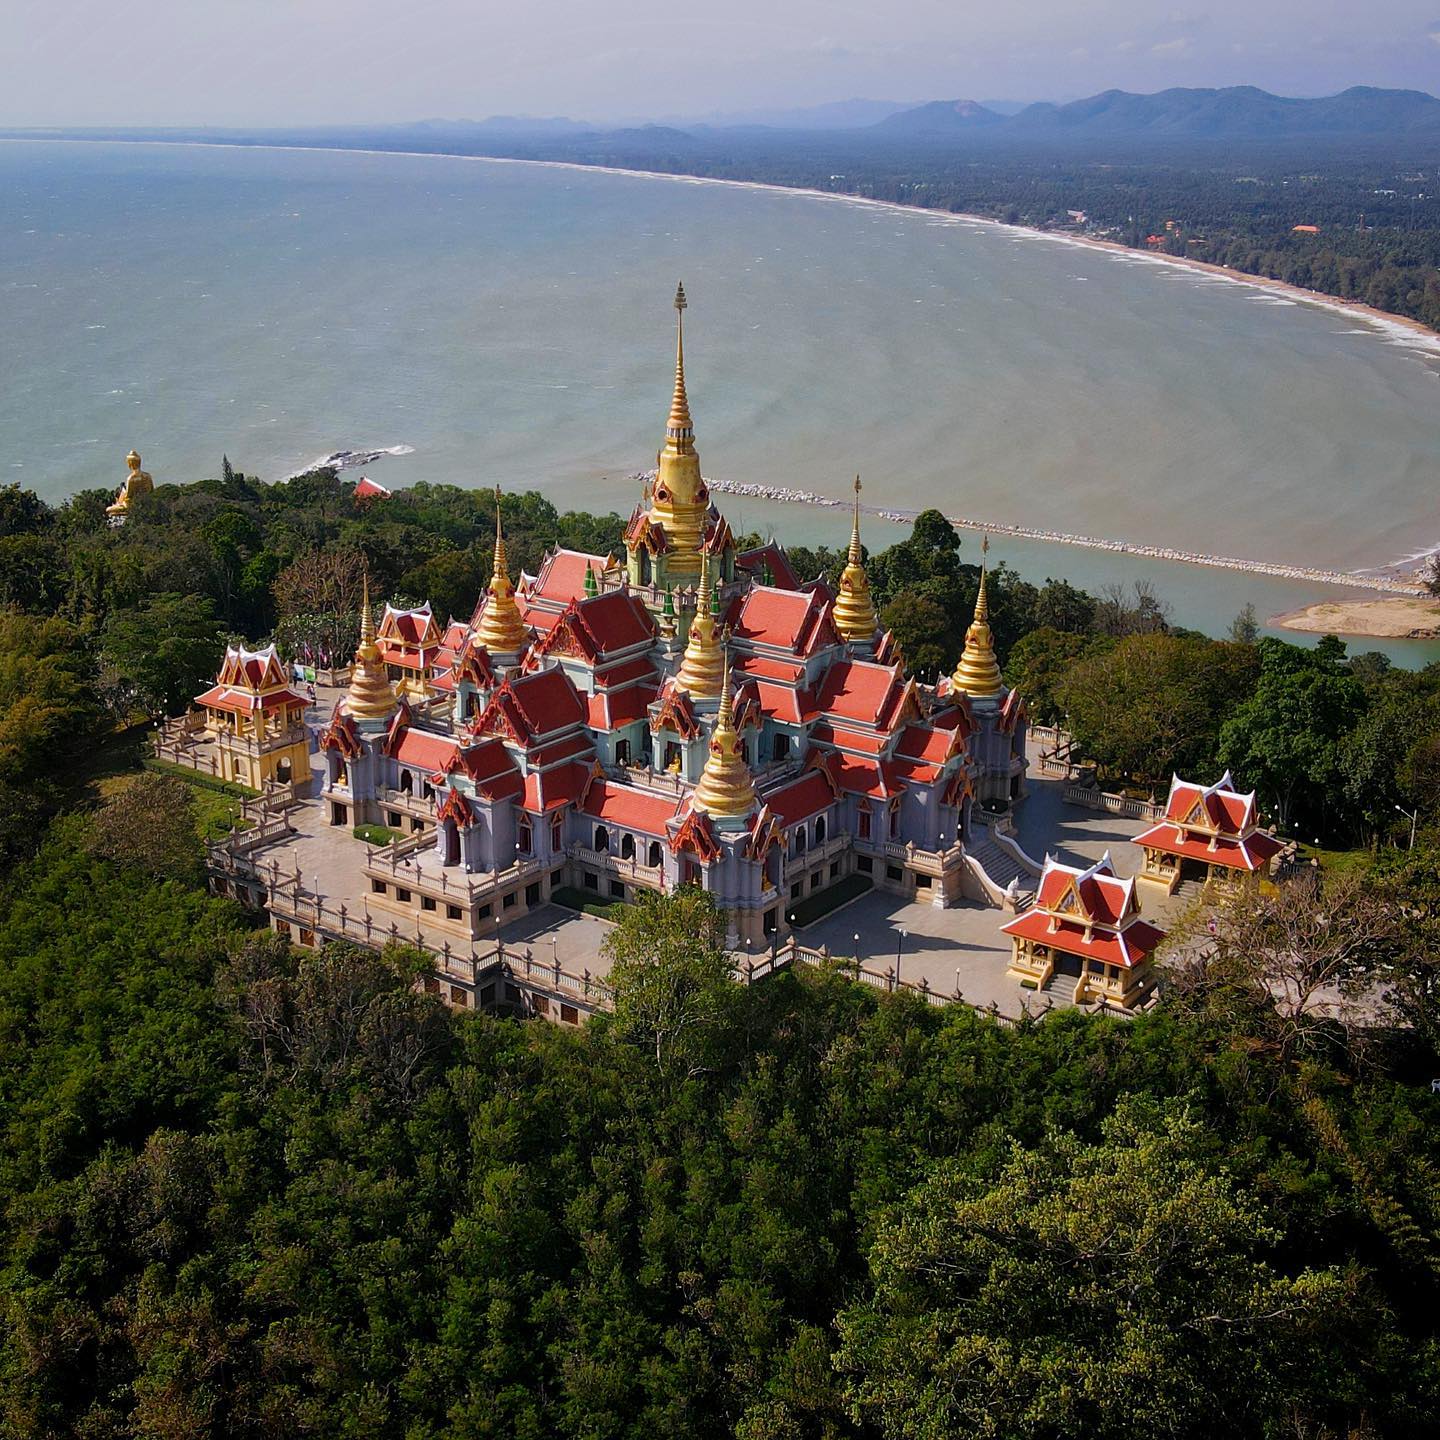 Phra Mahathat Chedi Phakdee Prakat is a beautiful looking temple on top of a hill overlooking Baan Krood Beach in Prachuap Khiri Khan. 

#Thai #ThaiTravel #Thailand #ThailandTravel #ThailandInsider #AmazingThailand #Thailand_IG #igThailand #travel #travelgram #TravelPhotography #travelblogger #GoLocal #ReviewThailand #Opentothenewshades #THAI temple #ภาพมุมสูง #ThaiDrone #ThailandDrone #drone #DroneThailand #dronestagram #dronephotography #dronephoto